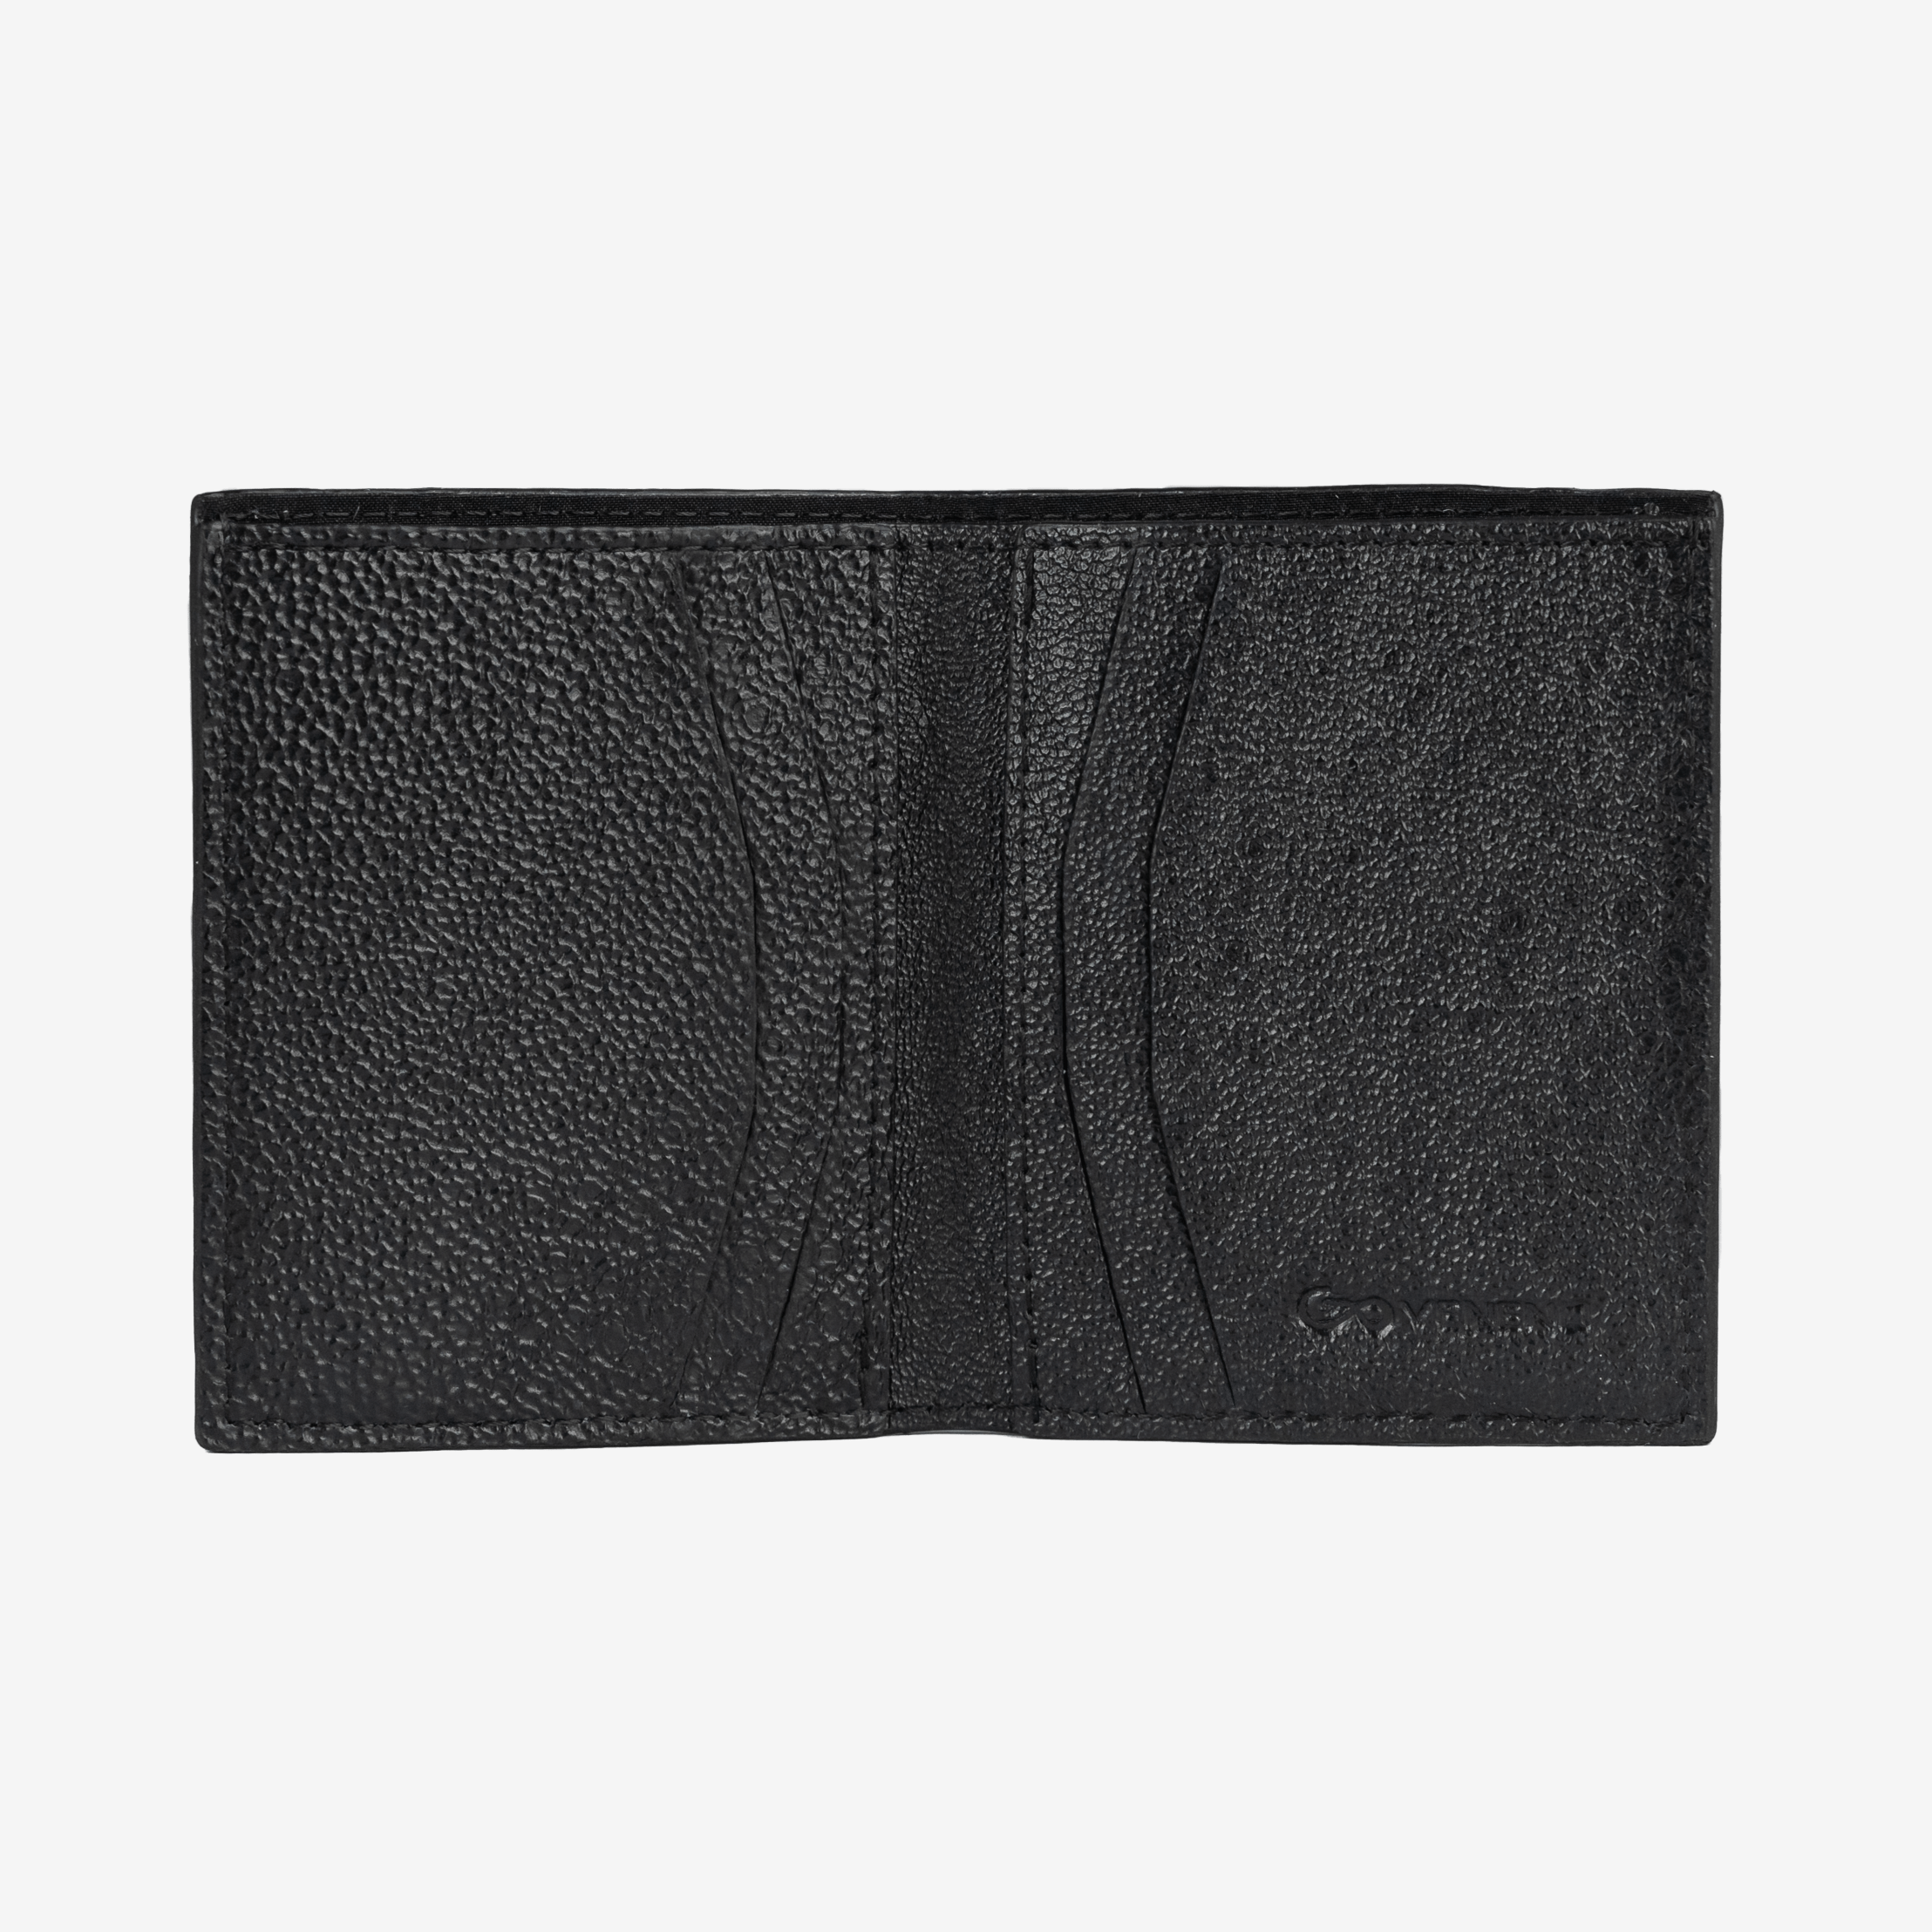 Veneno Leather Goods Cartera Compacta "The TIE"-Deep Black